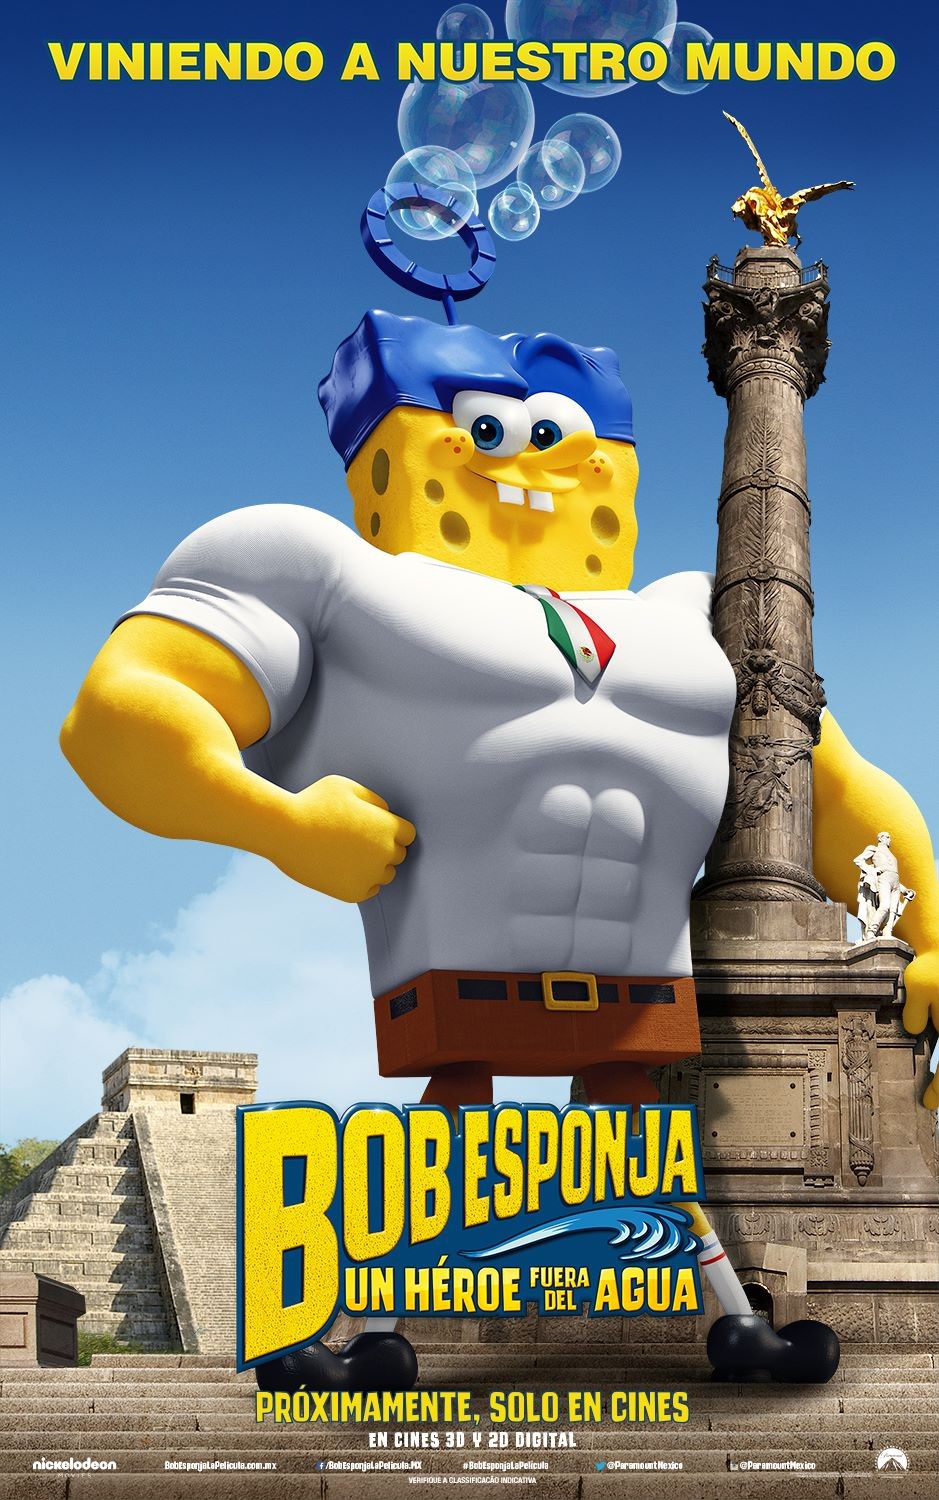 Extra Large Movie Poster Image for SpongeBob SquarePants 2 (#14 of 33)